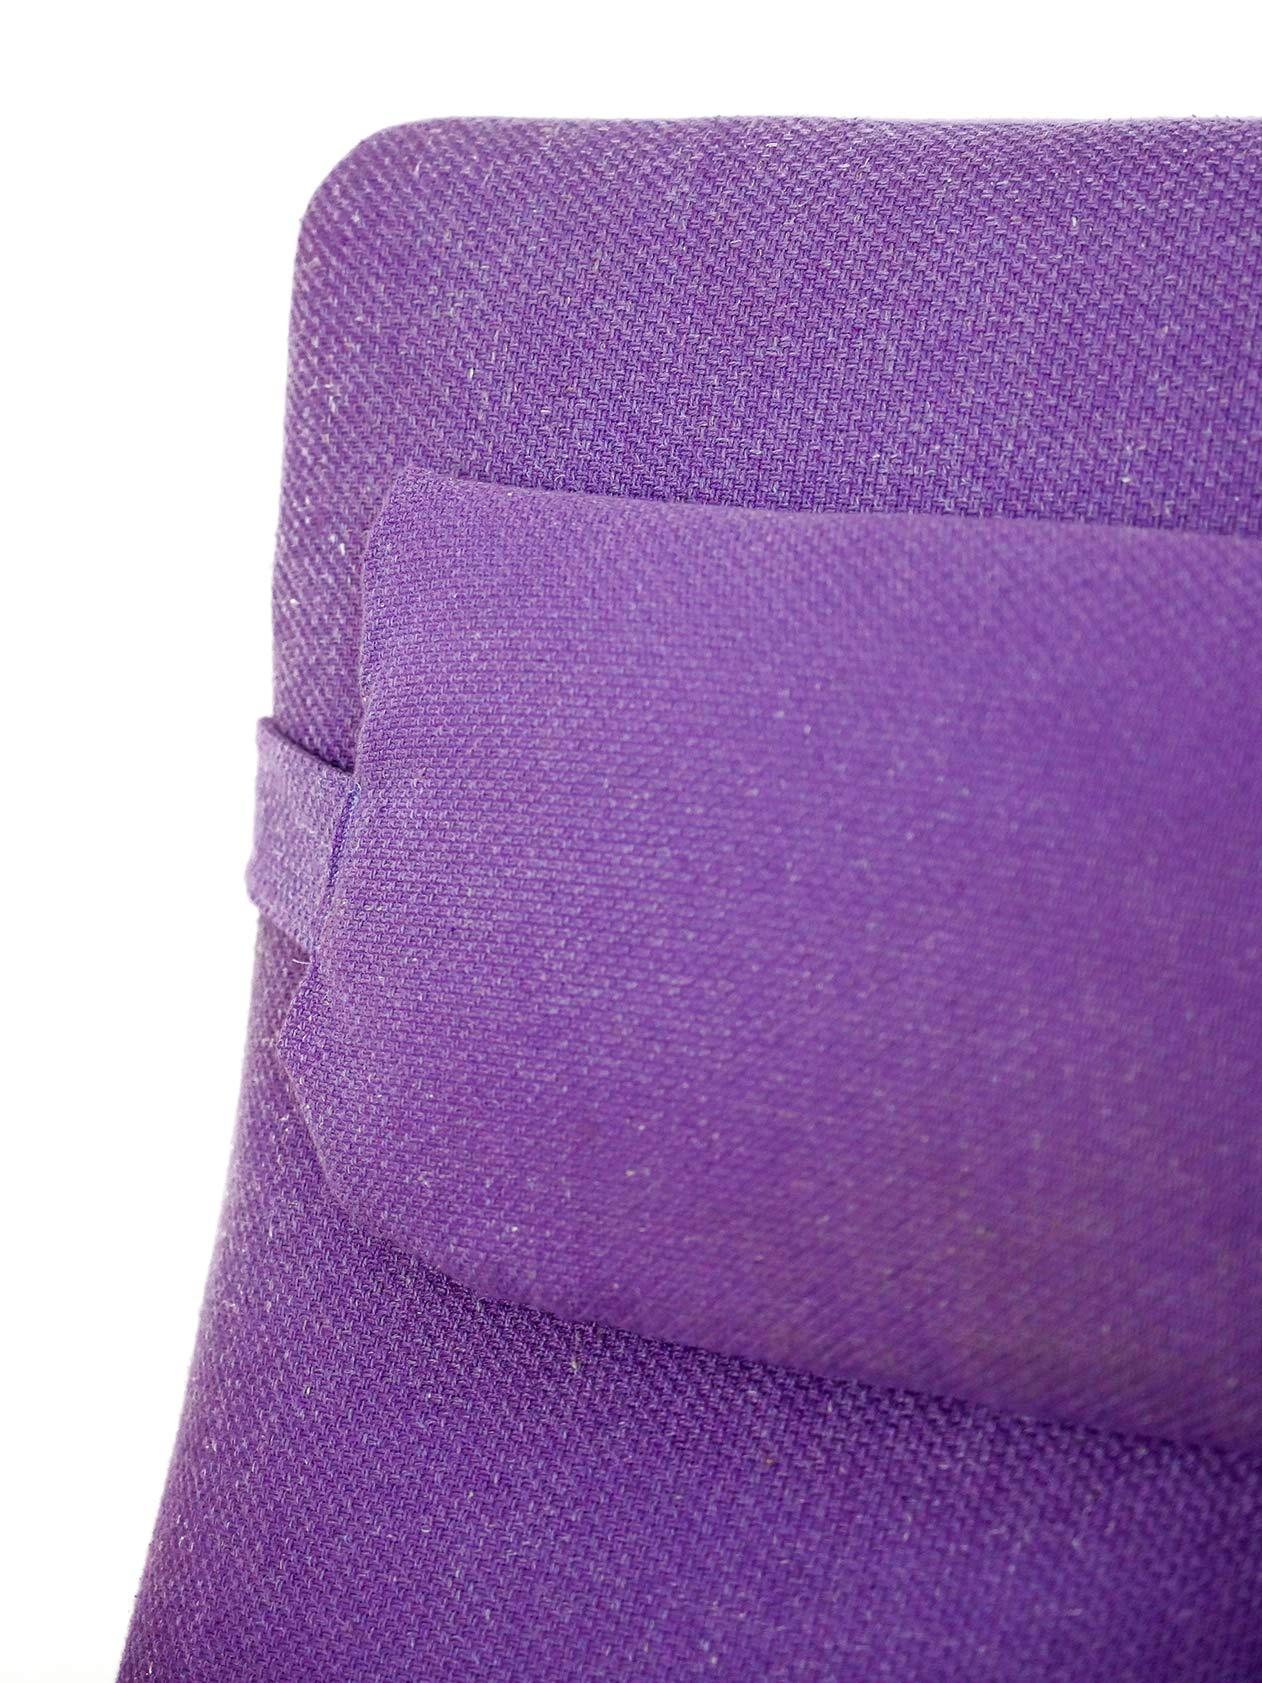 Scandinavian armchair with purple fabric For Sale 2